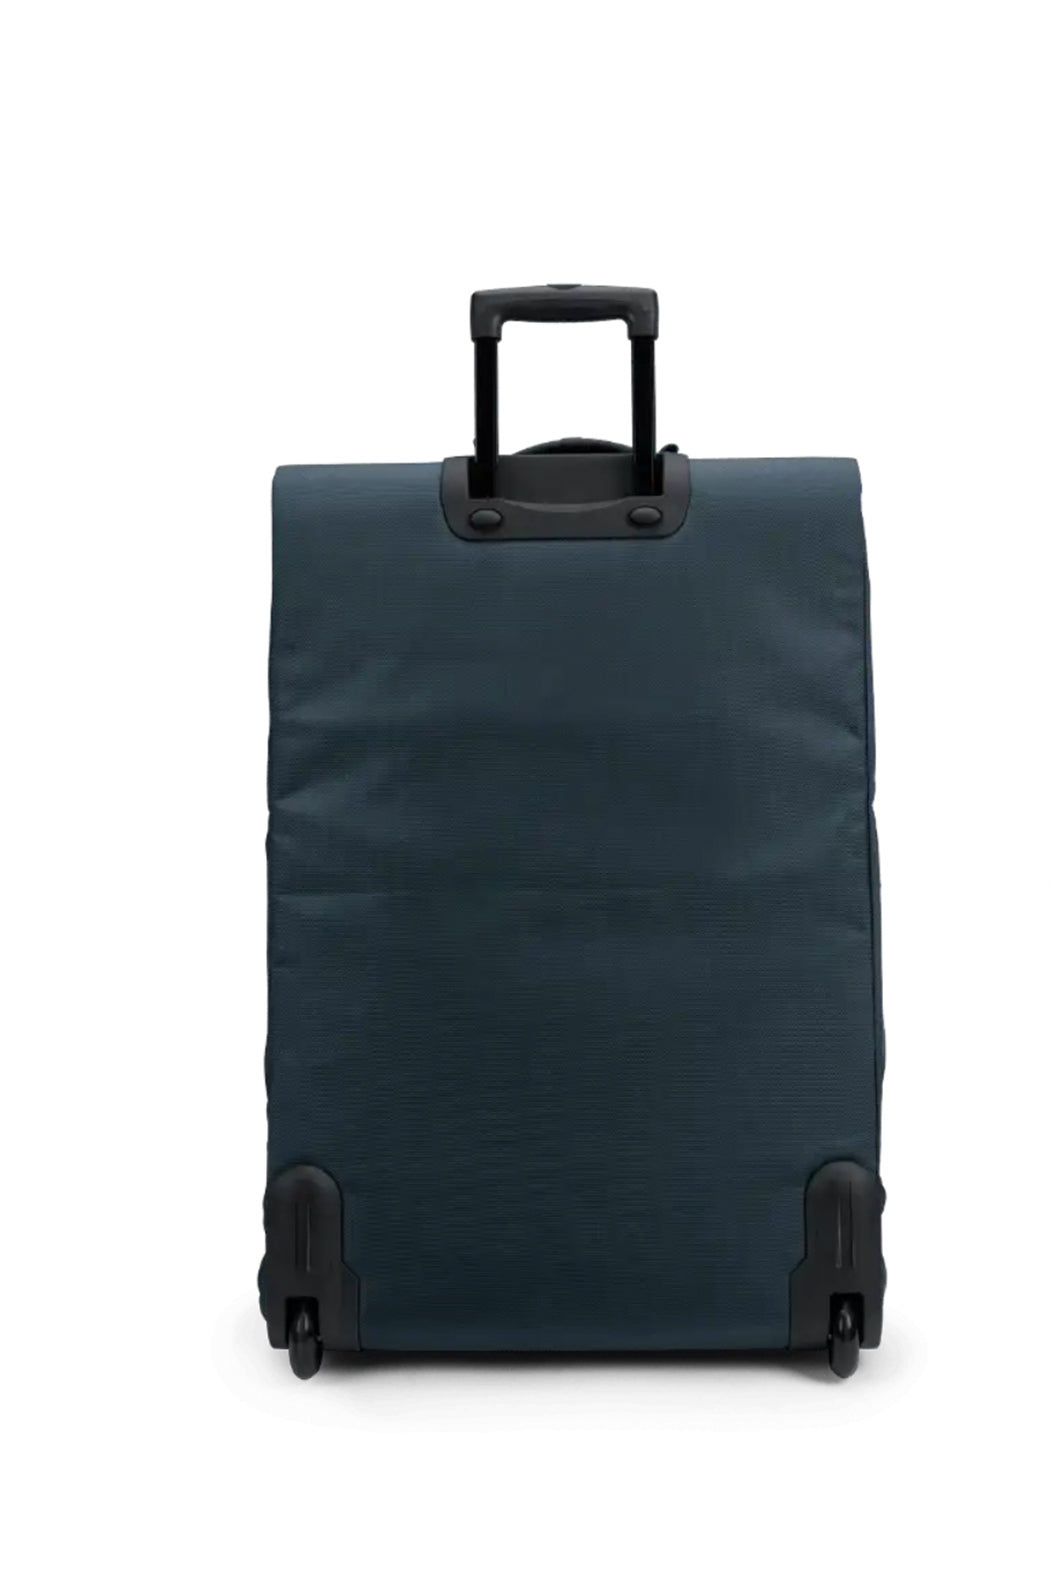 nuna Wheeled Travel Bag